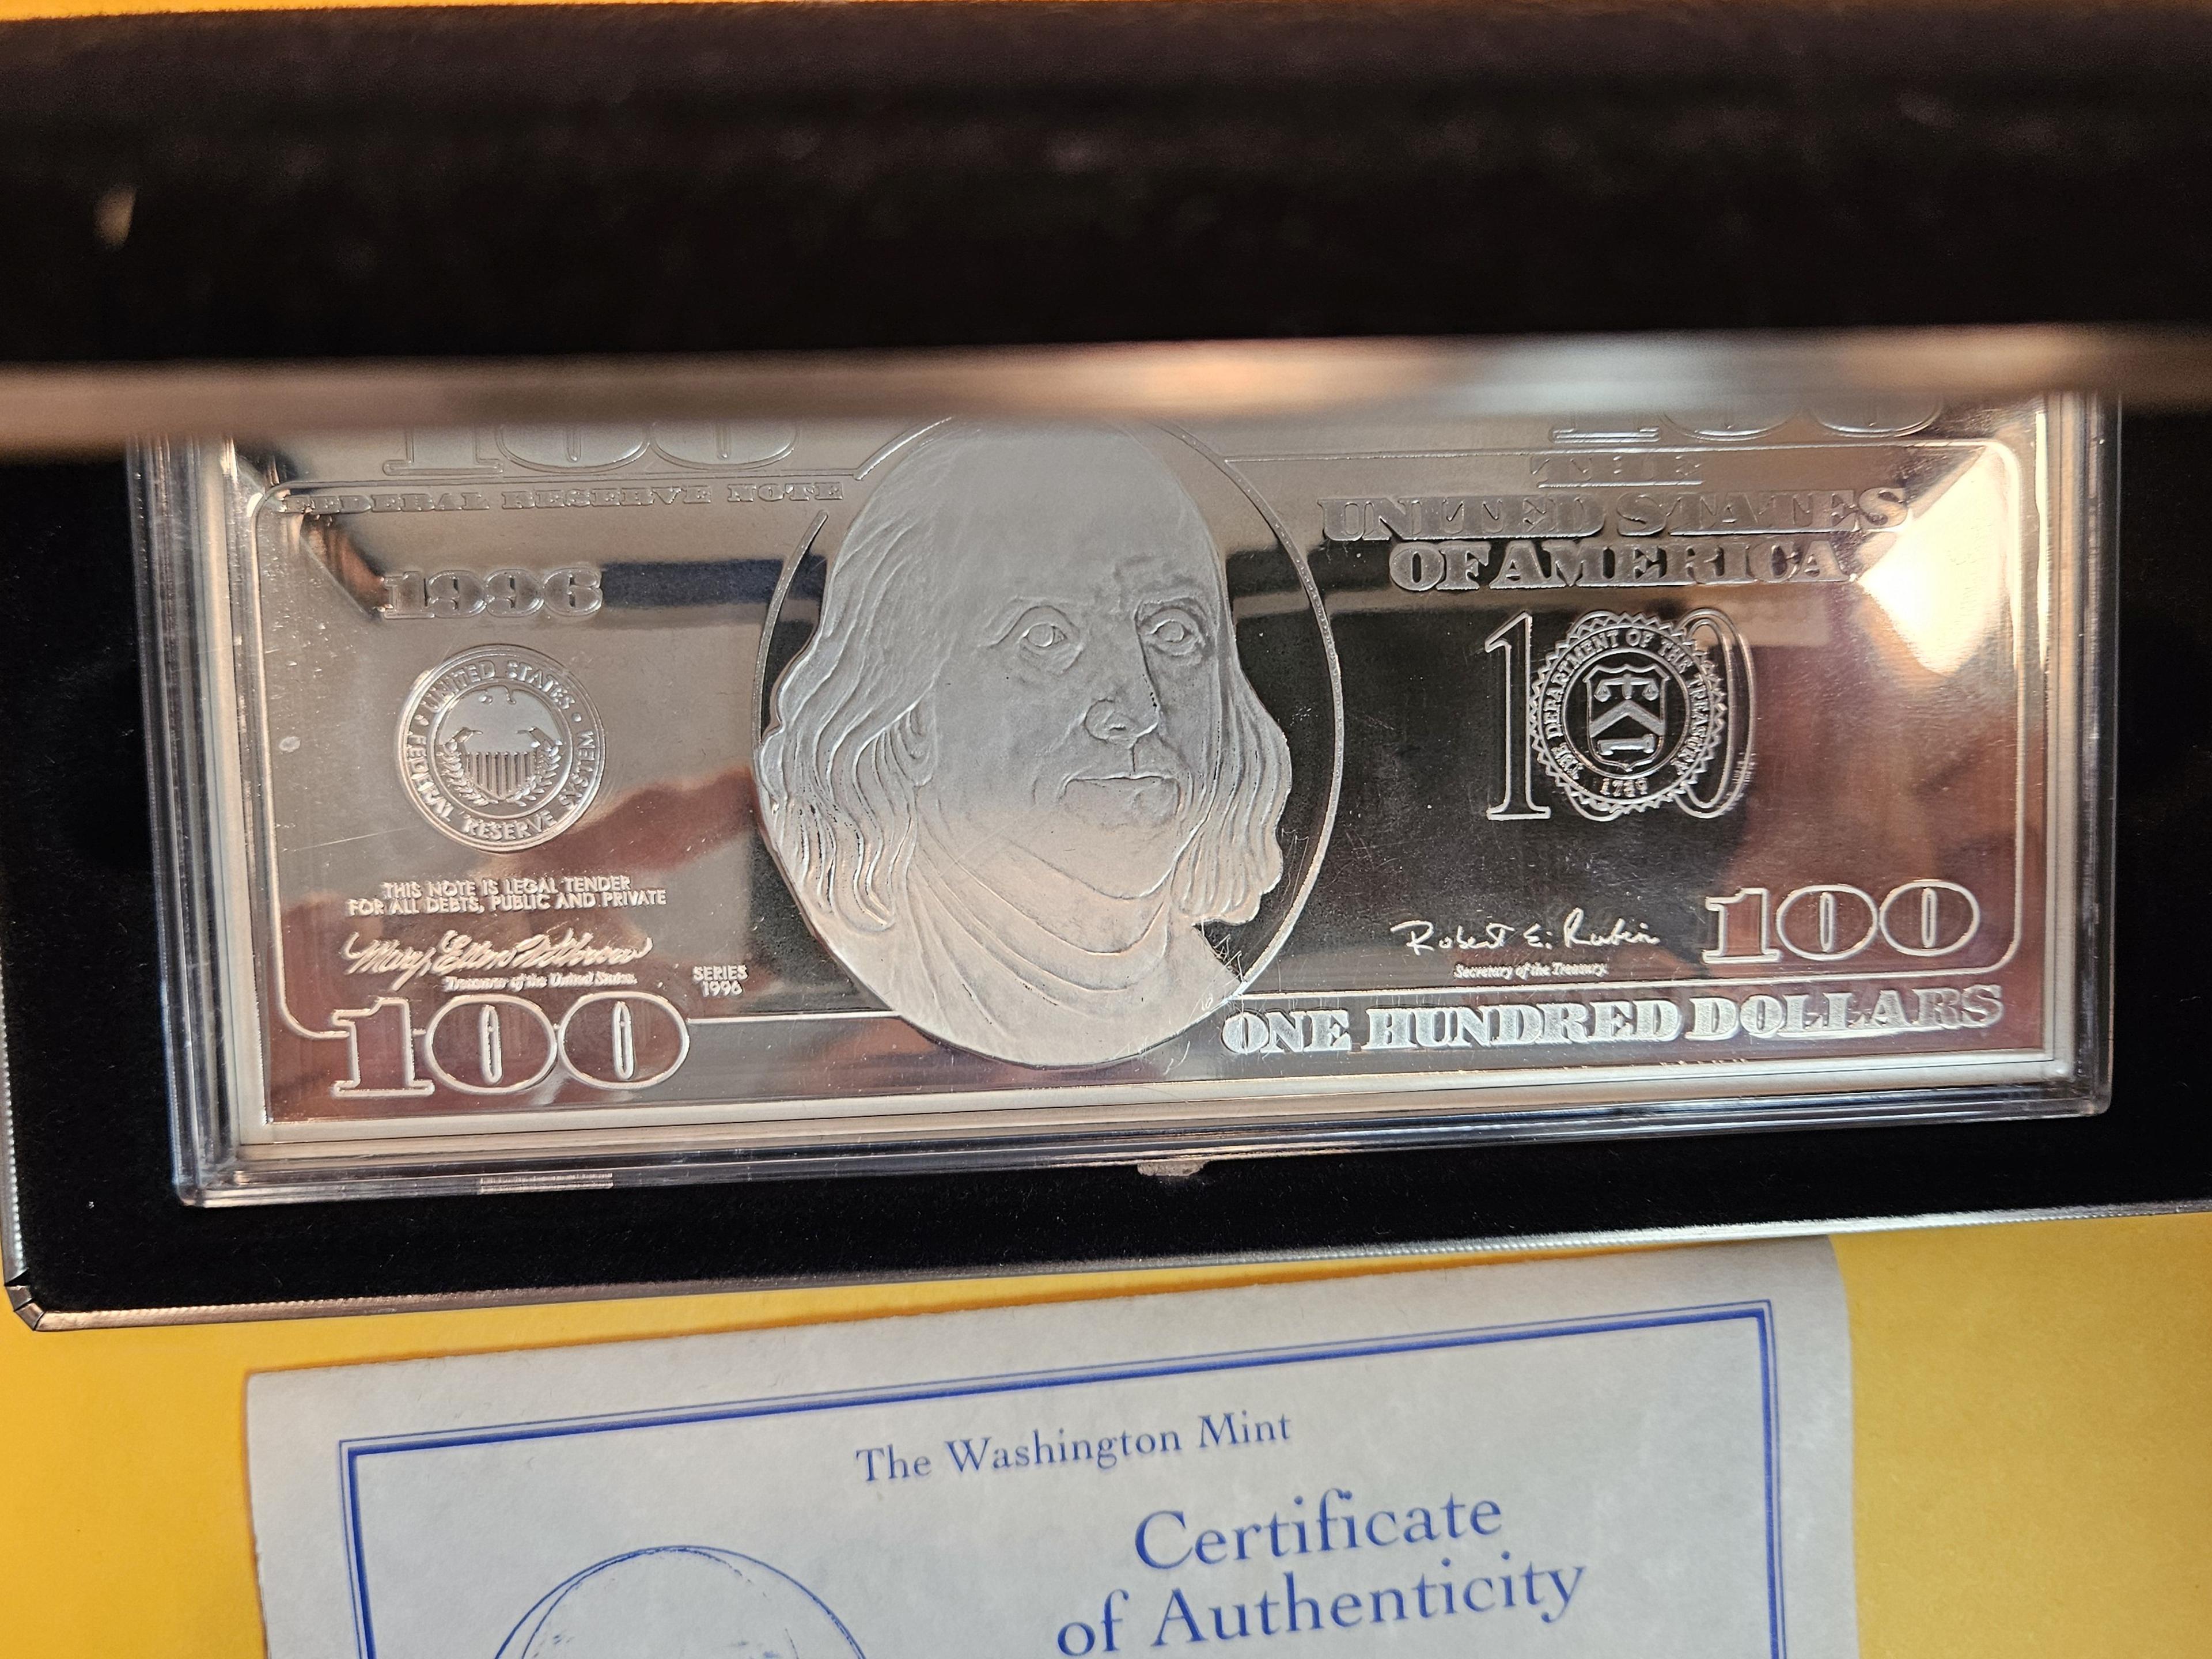 One-Quarter Pound .999 fine silver Proof art bar